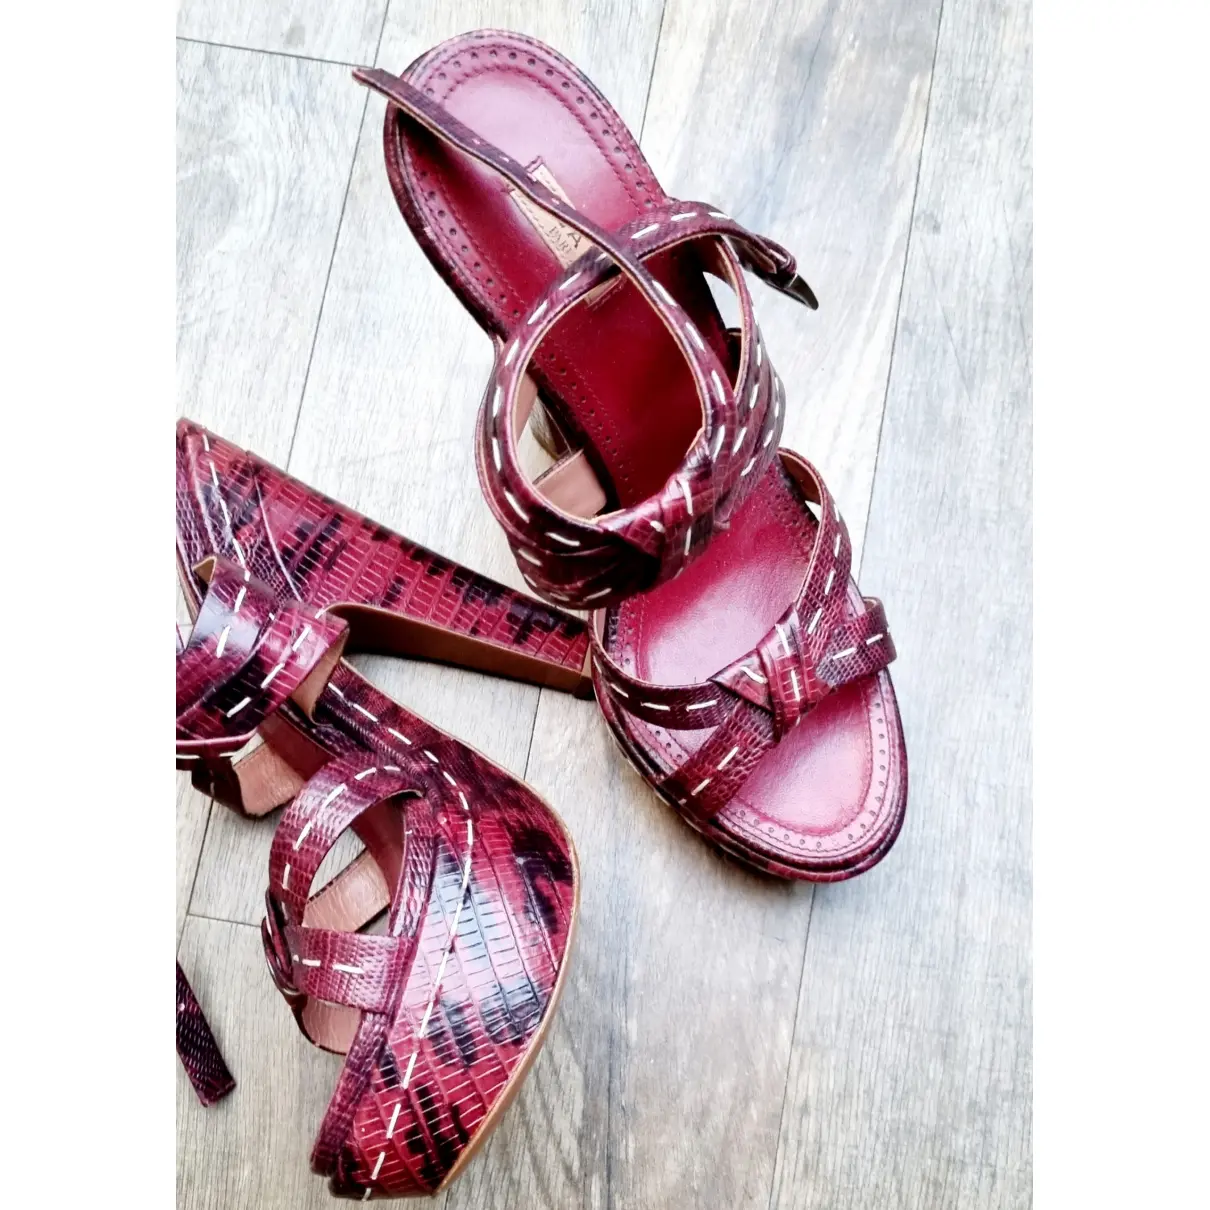 Buy Alaïa Sandals online